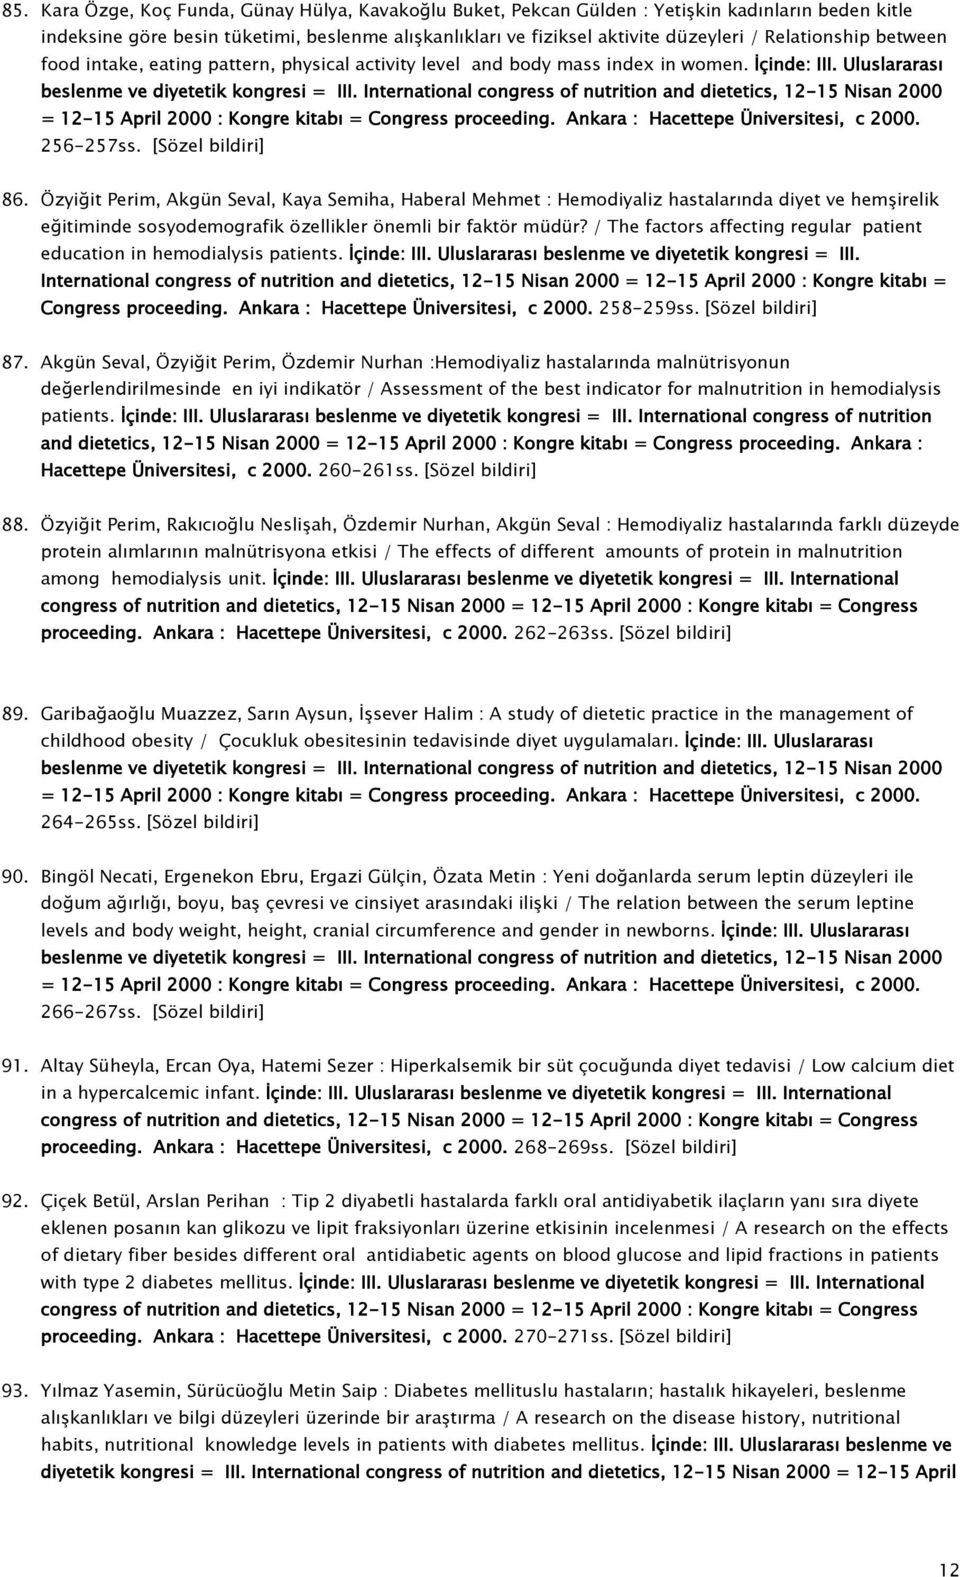 International congress of nutrition and dietetics, 12-15 Nisan 2000 = 12-15 April 2000 : Kongre kitabı = Congress proceeding. Ankara : Hacettepe Üniversitesi, c 2000. 256-257ss. [Sözel bildiri] 86.